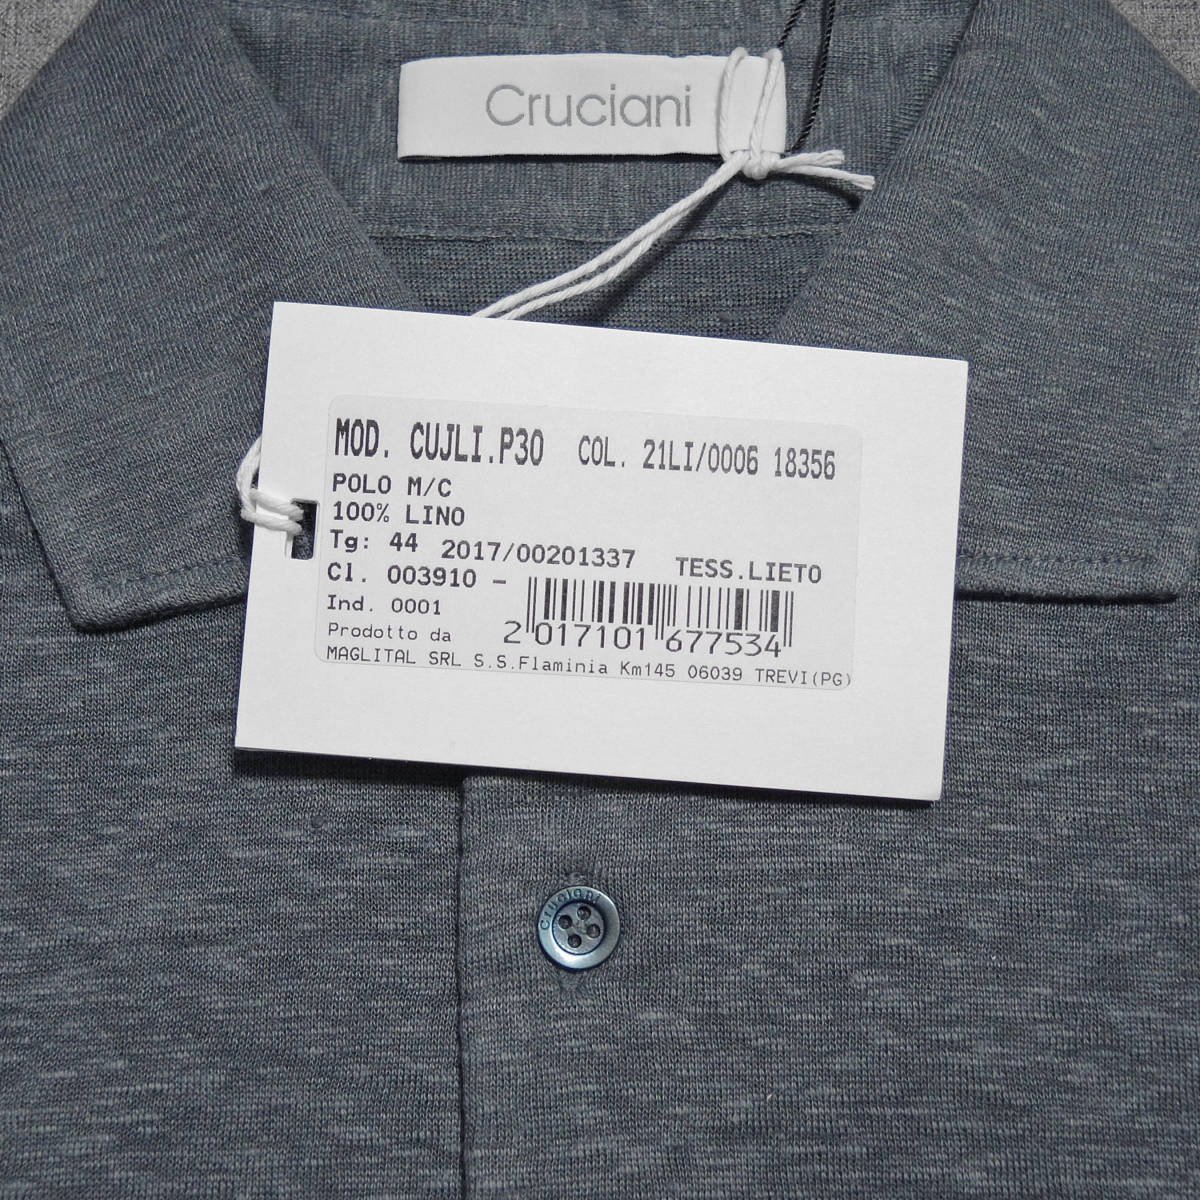 Cruciani ポロシャツ 44 クルチアーニ 最高級 リネン生地 ブルーグレー 定価3.6万 イタリア